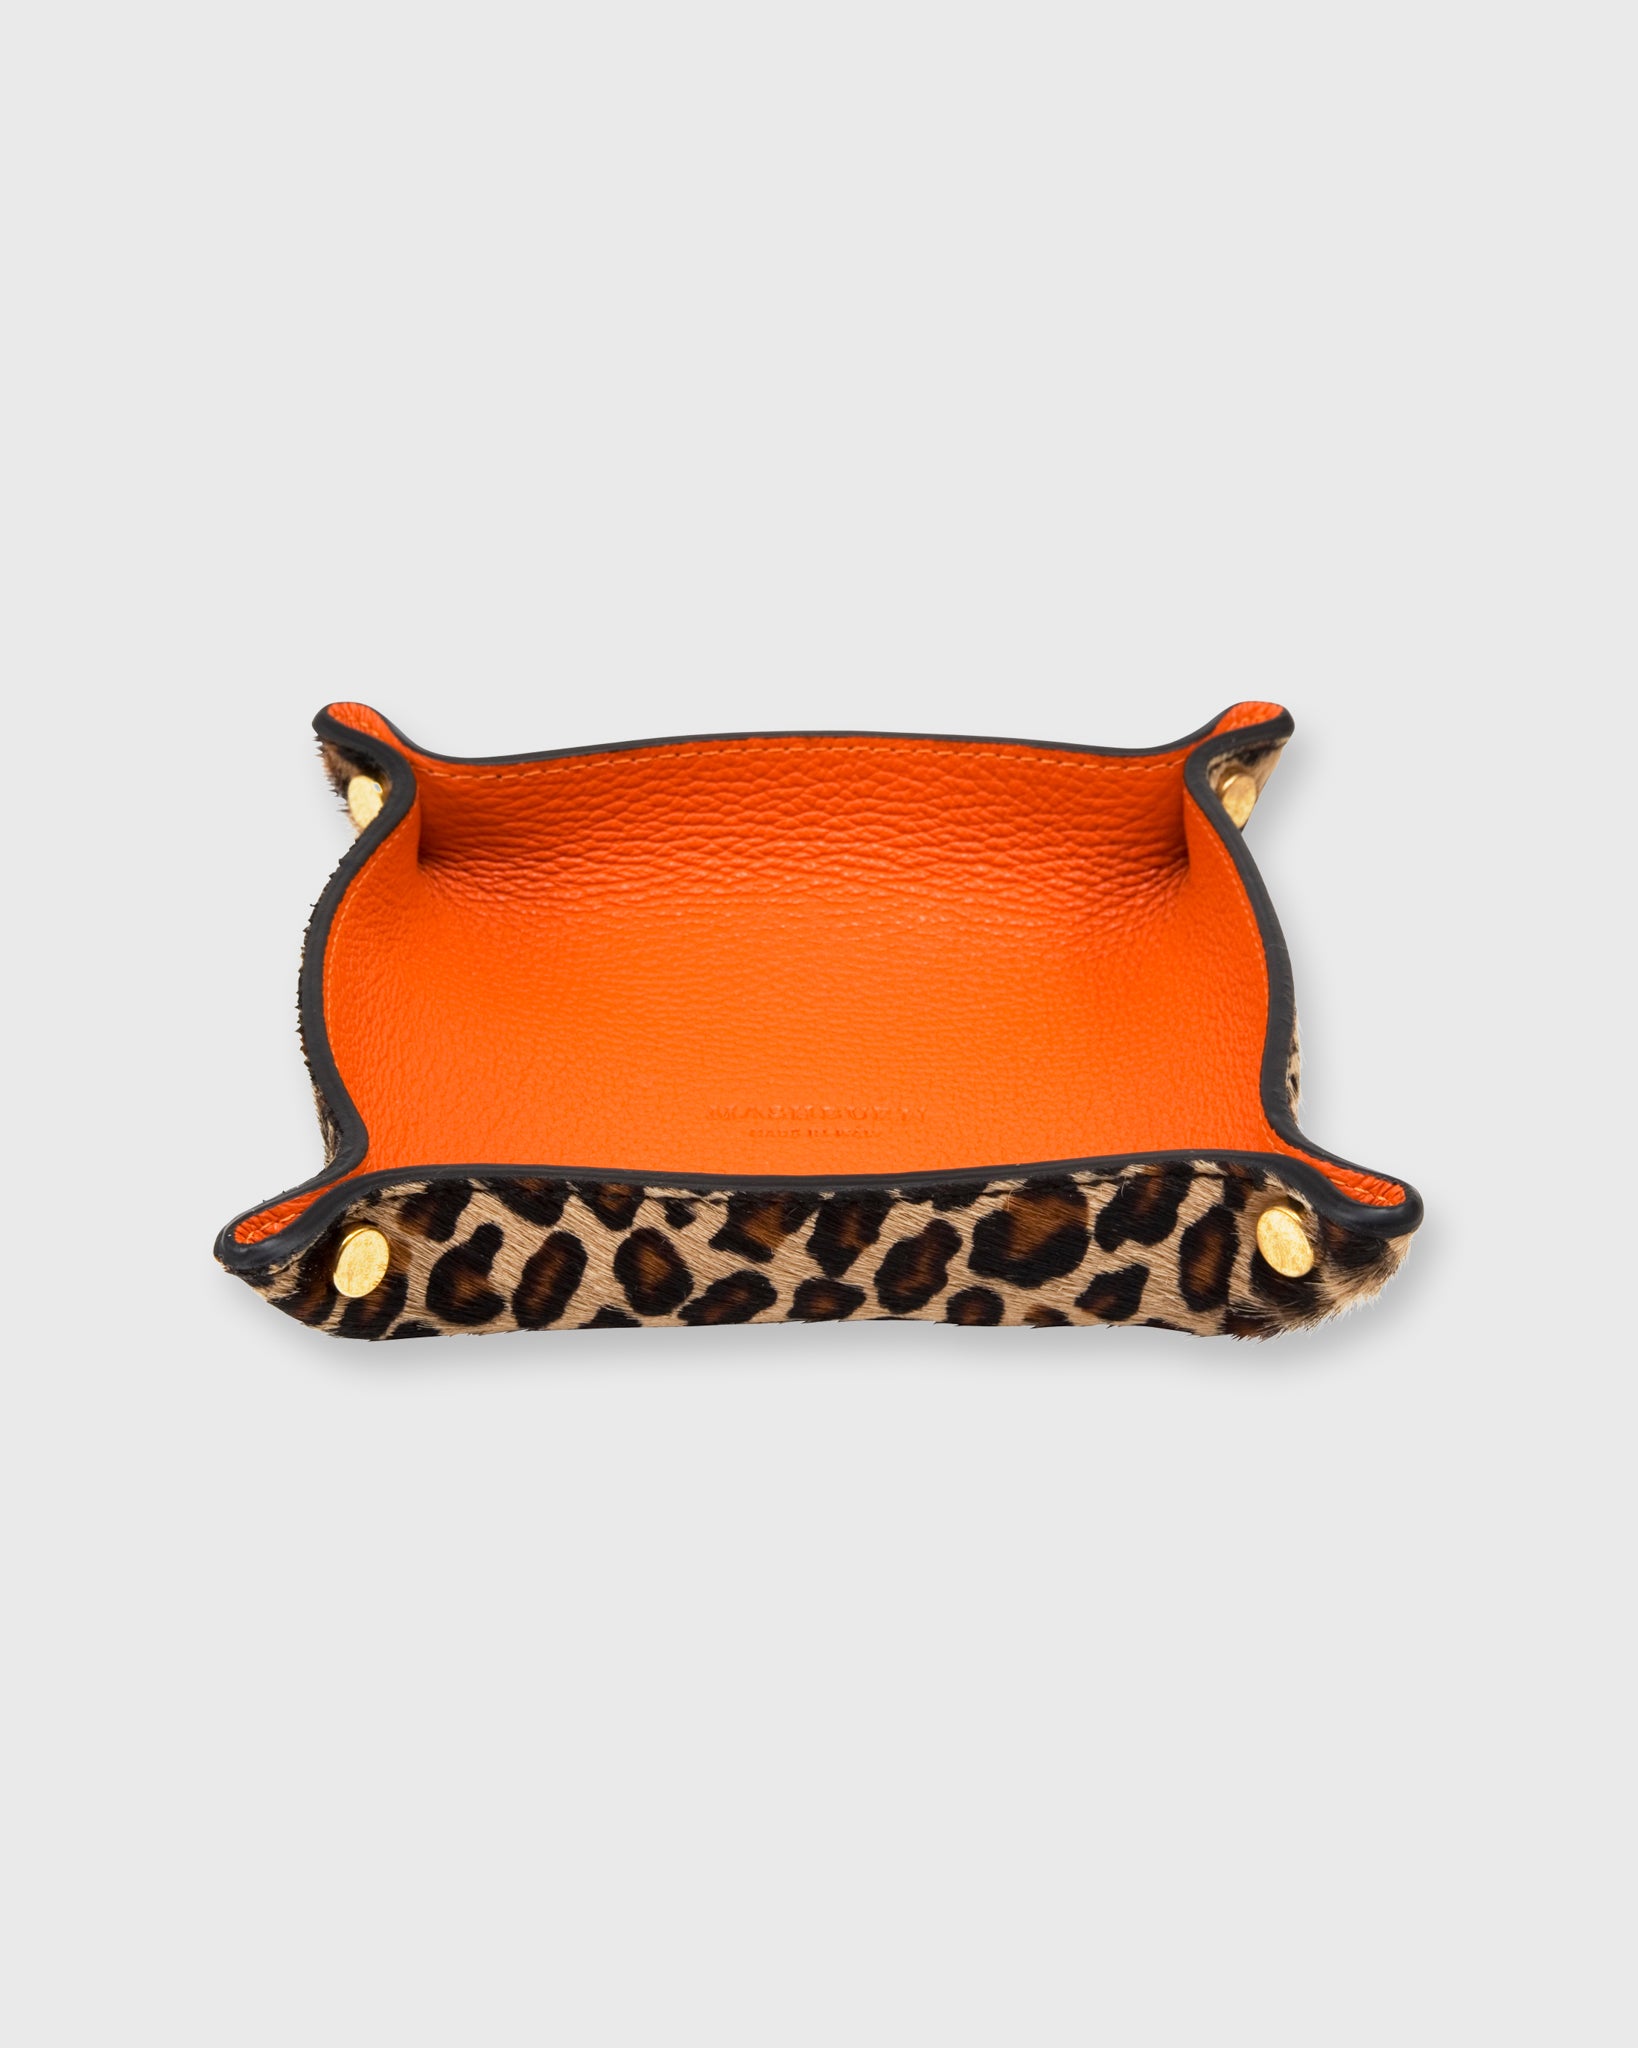 Soft Medium Square Tray in Orange Leather/Leopard Calf Hair